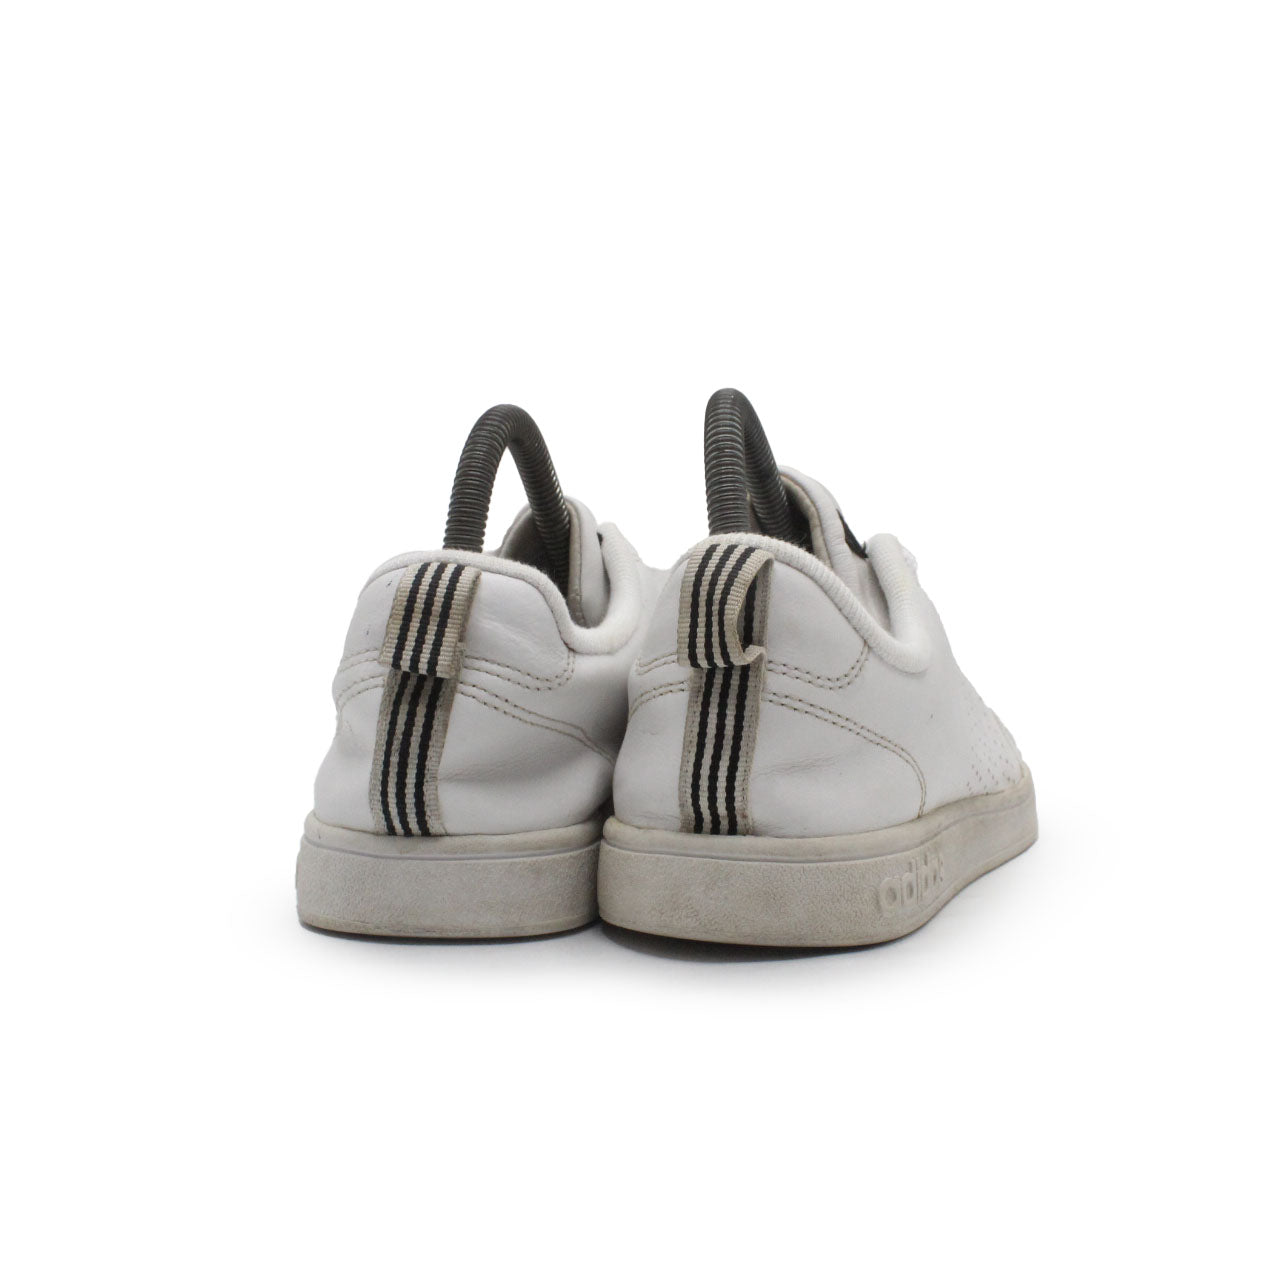 Adidas Neo Cloudfoam Advantage Casual Shoe